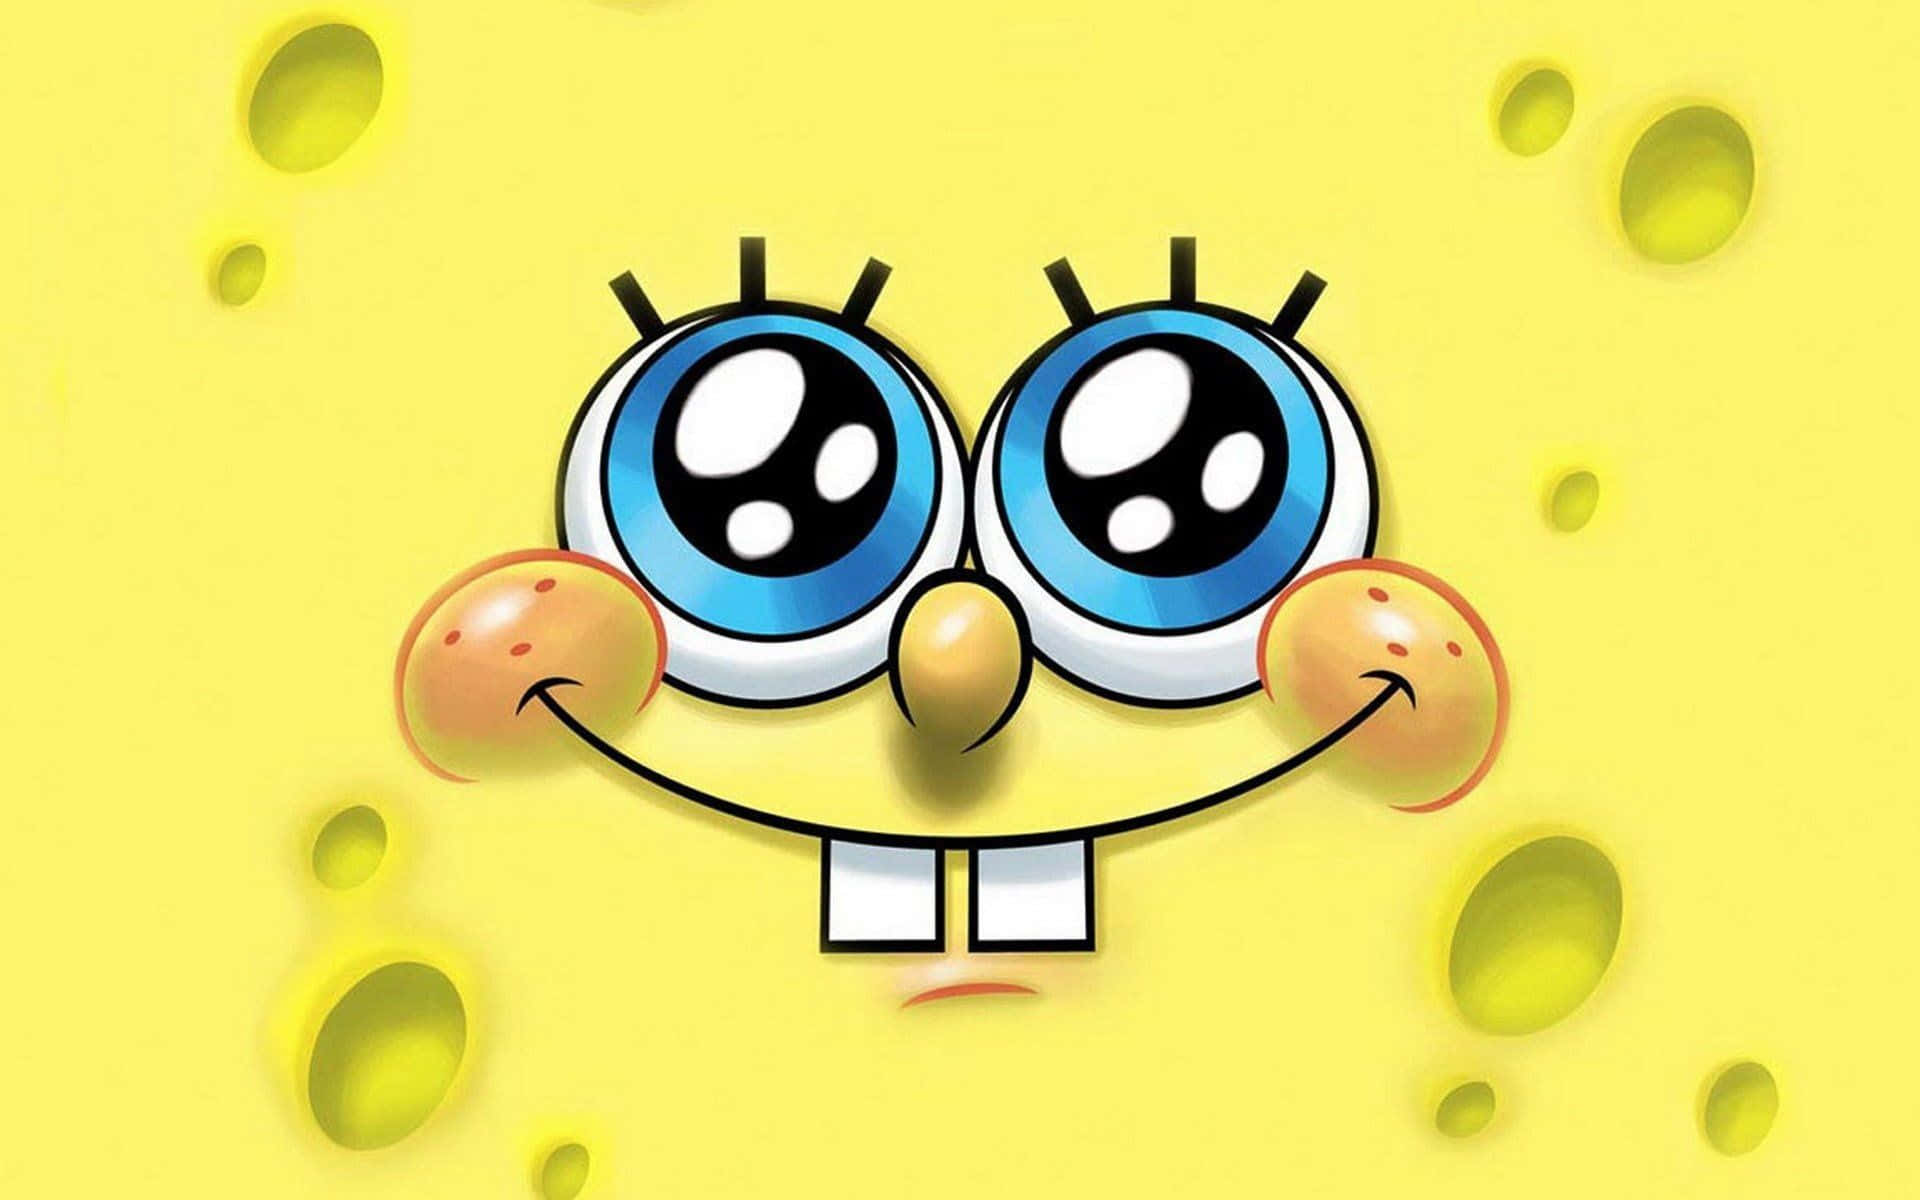 Everyone loves a good laugh with Spongebob Squarepants!